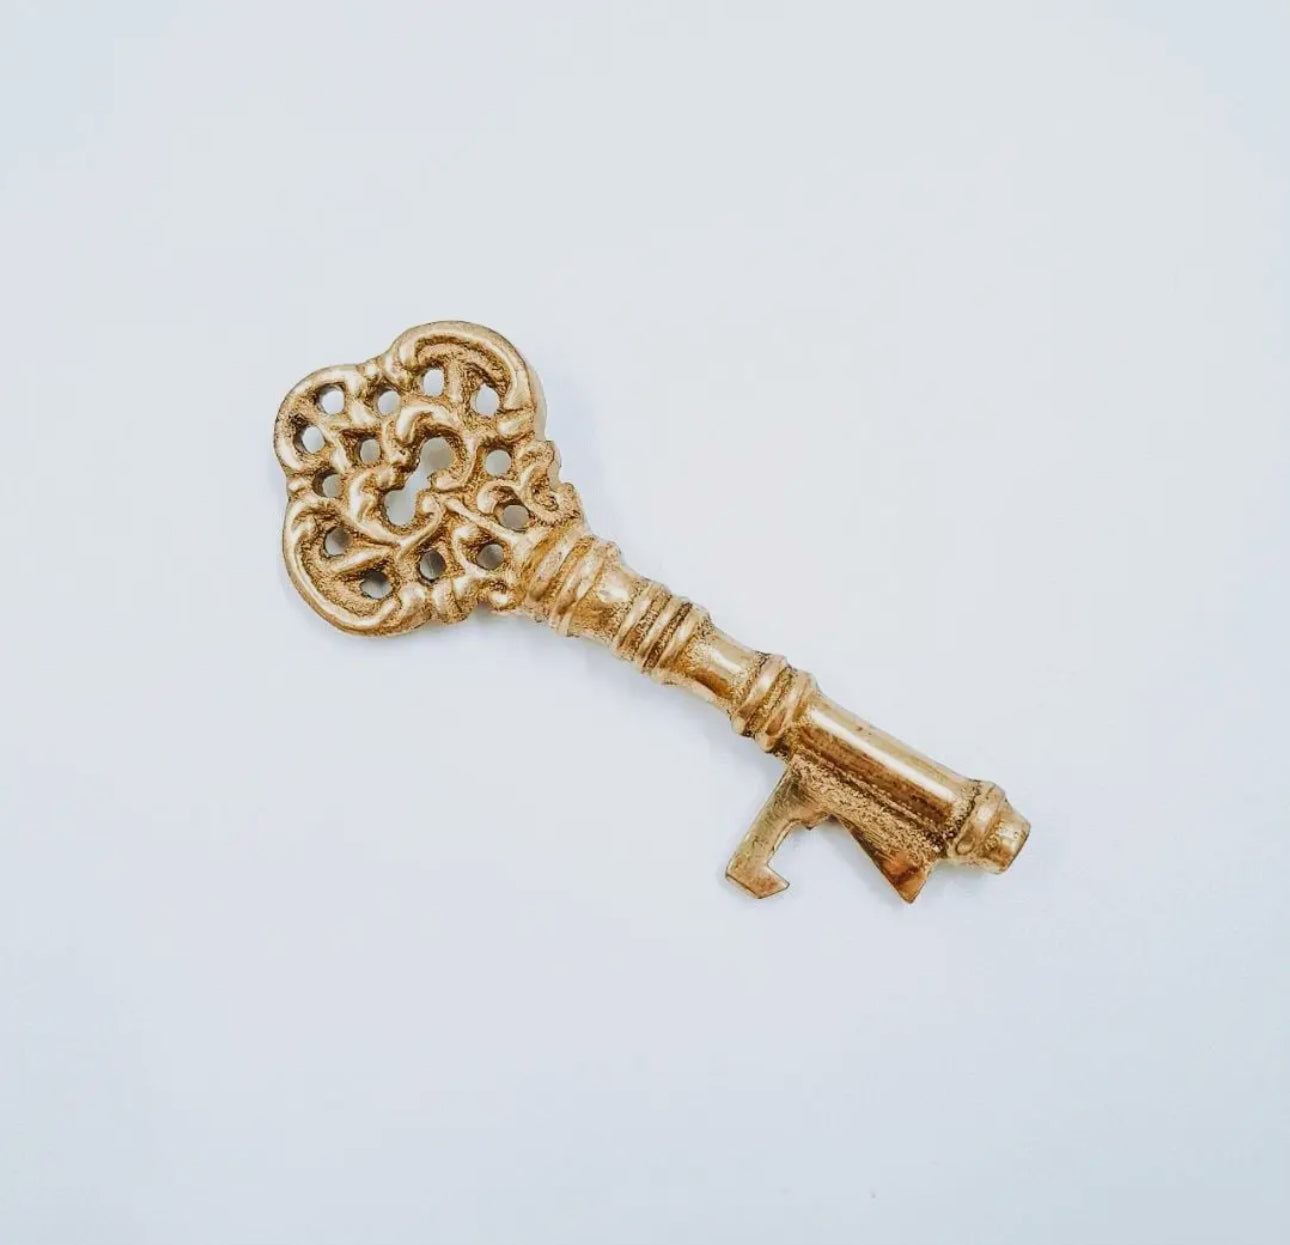 Brass antique key bottle opener